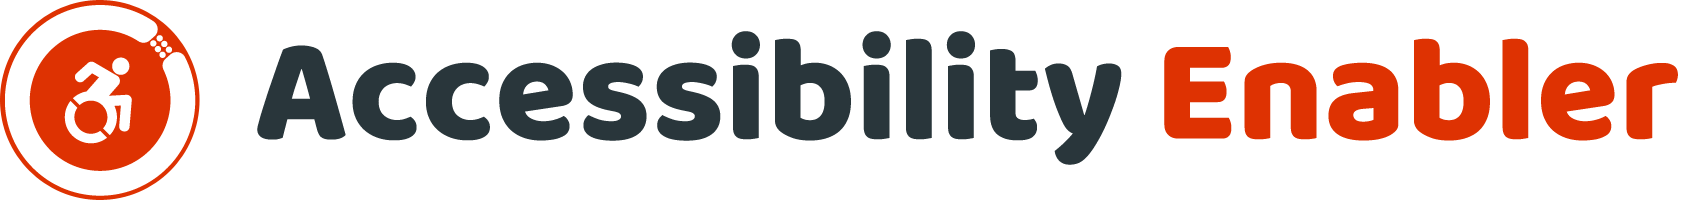 Accessibility Enabler Full Logo